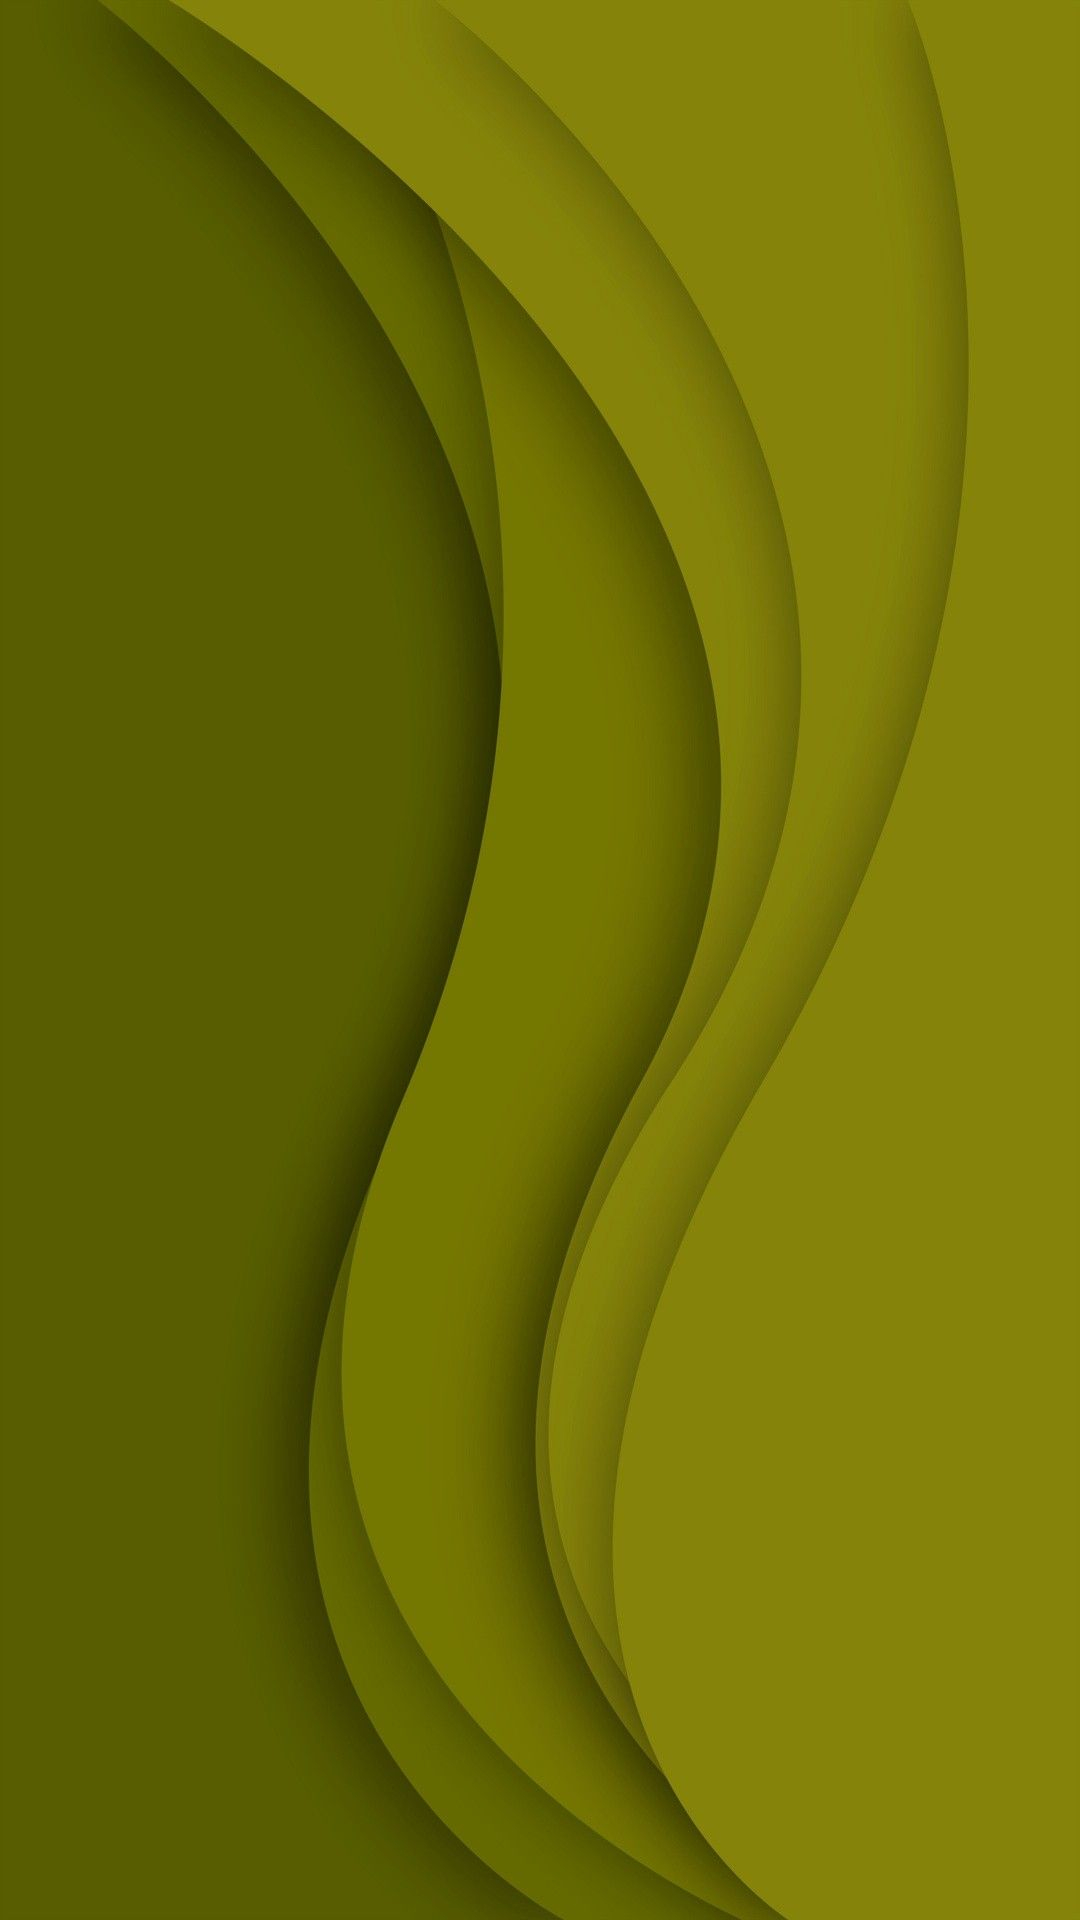 1080x1920 Minimal Mustard | Art wallpaper iphone, Phone wallpaper design, Galaxy phone wallpaper